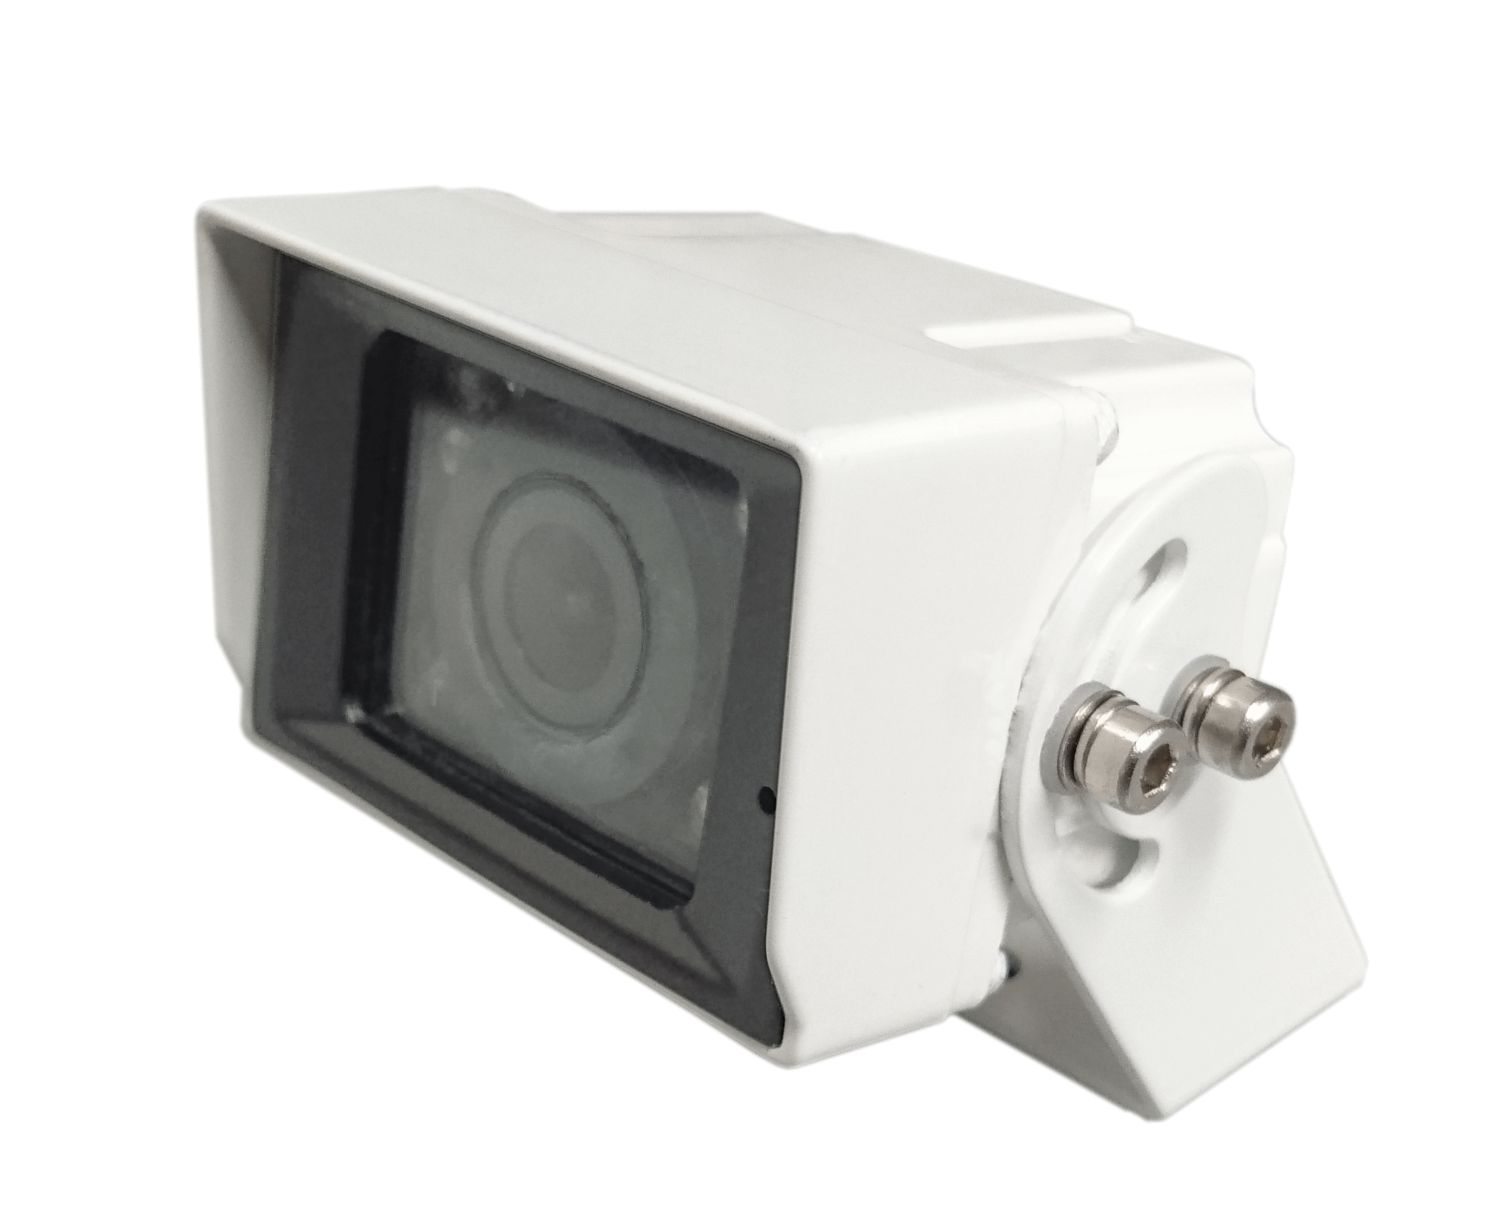 109WP: Compact camera - nightvision (white) (PAL)